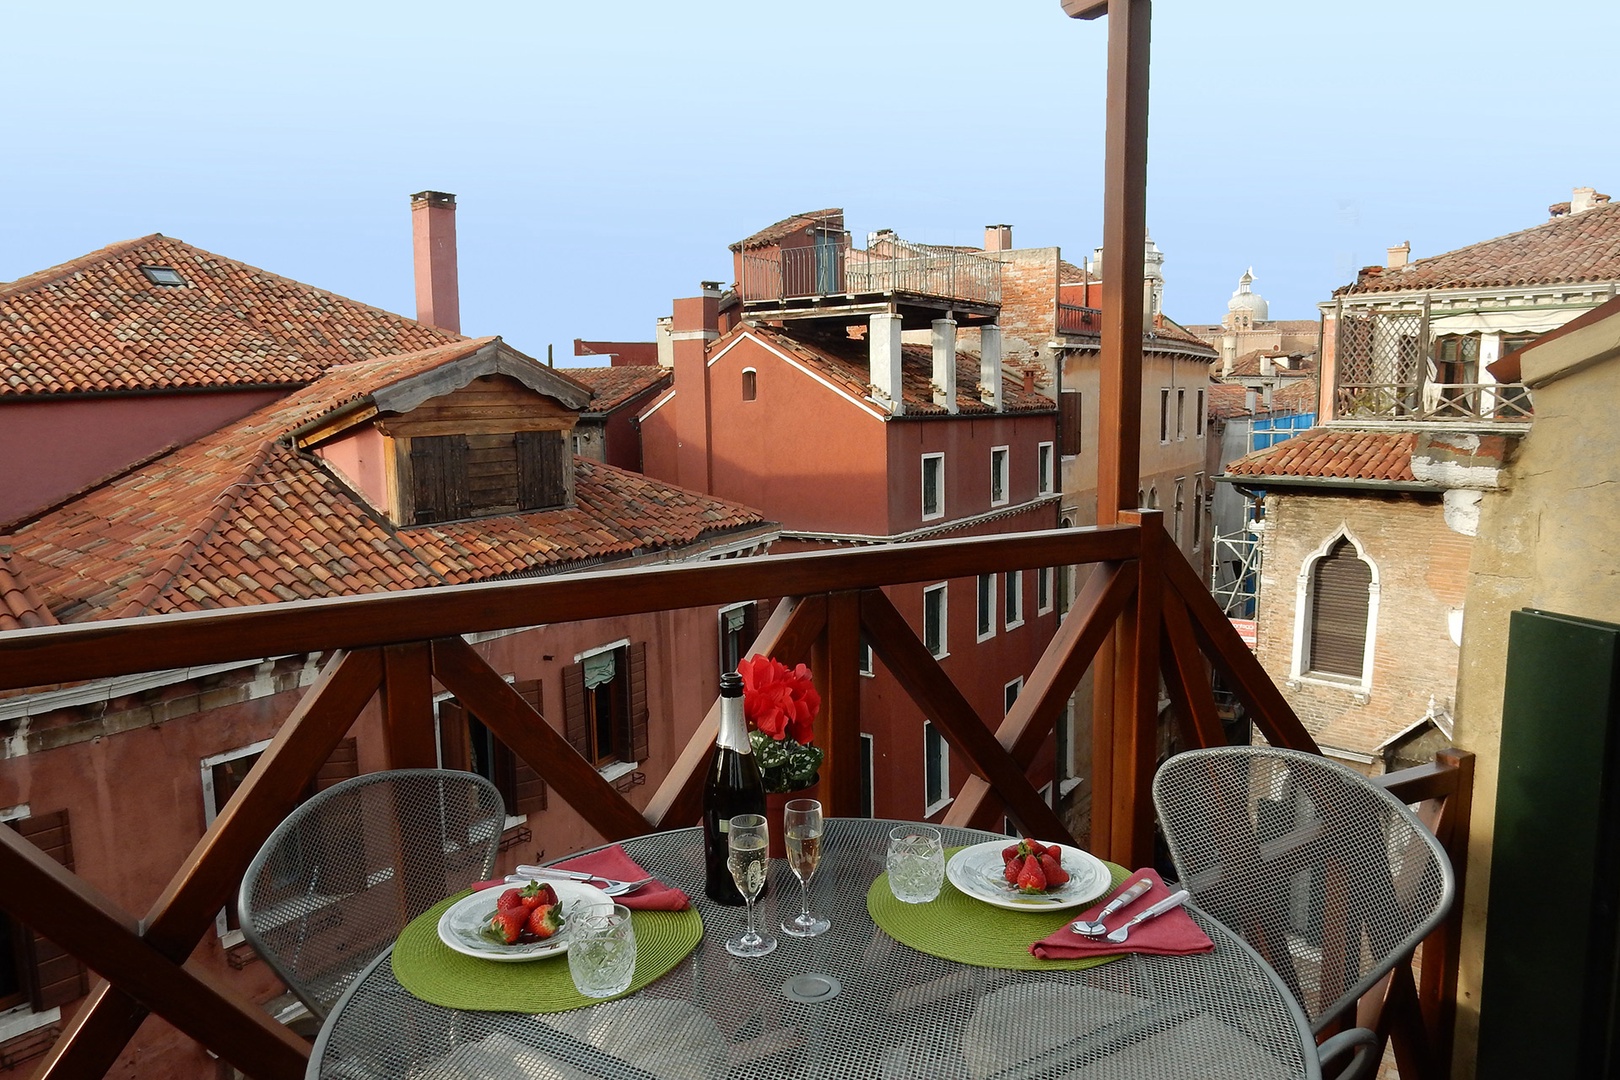 Enjoy beautiful views from the Serenata apartment's altana terrace.